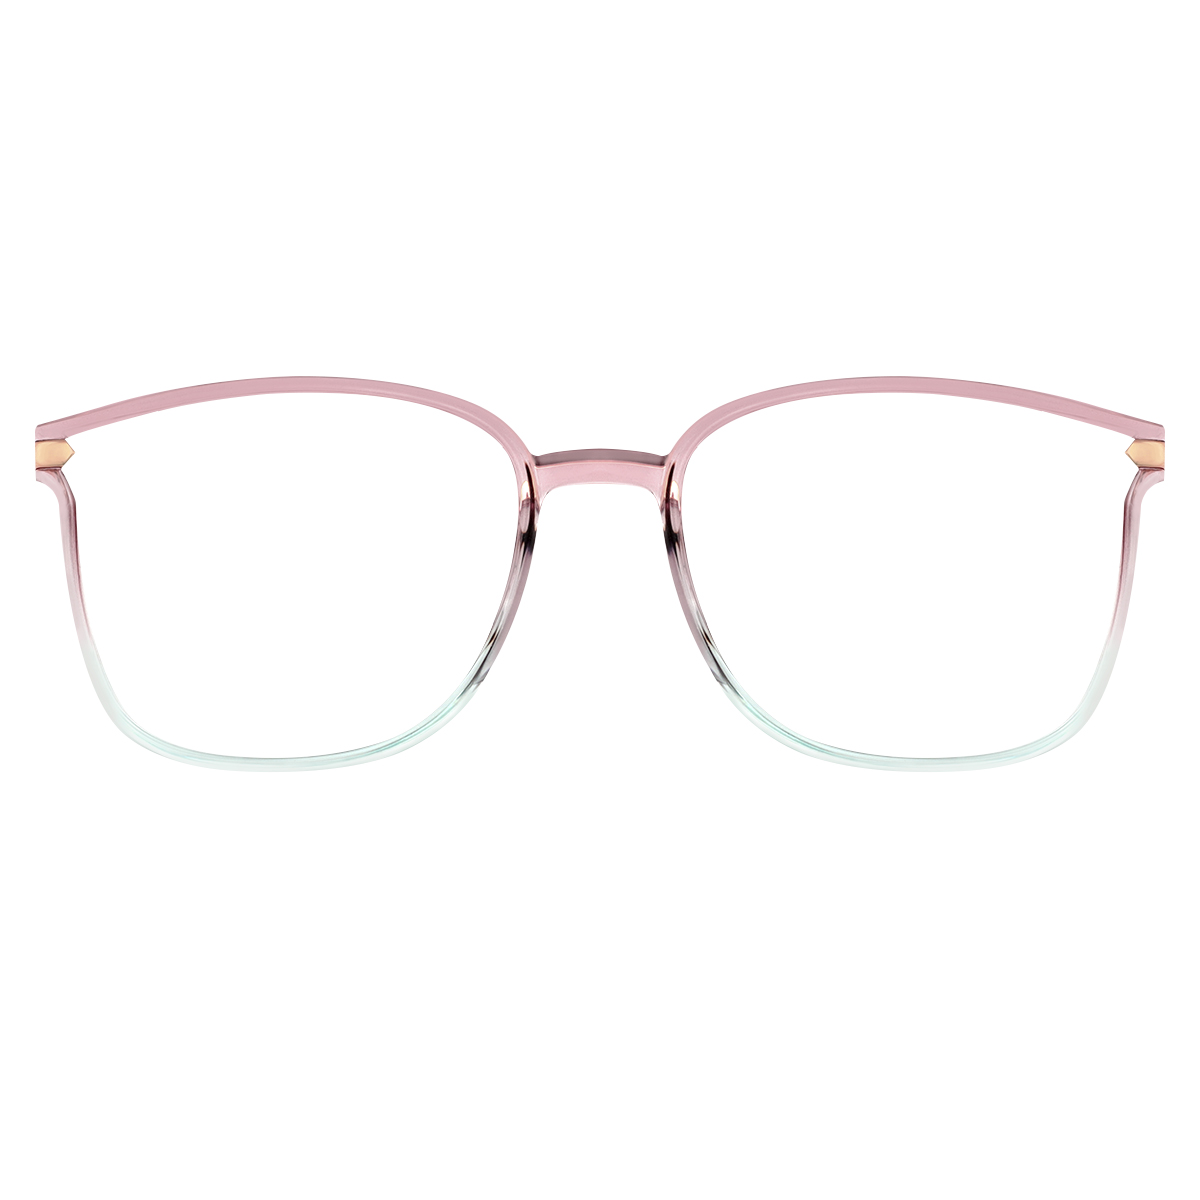 square reading-glasses #568 - pink